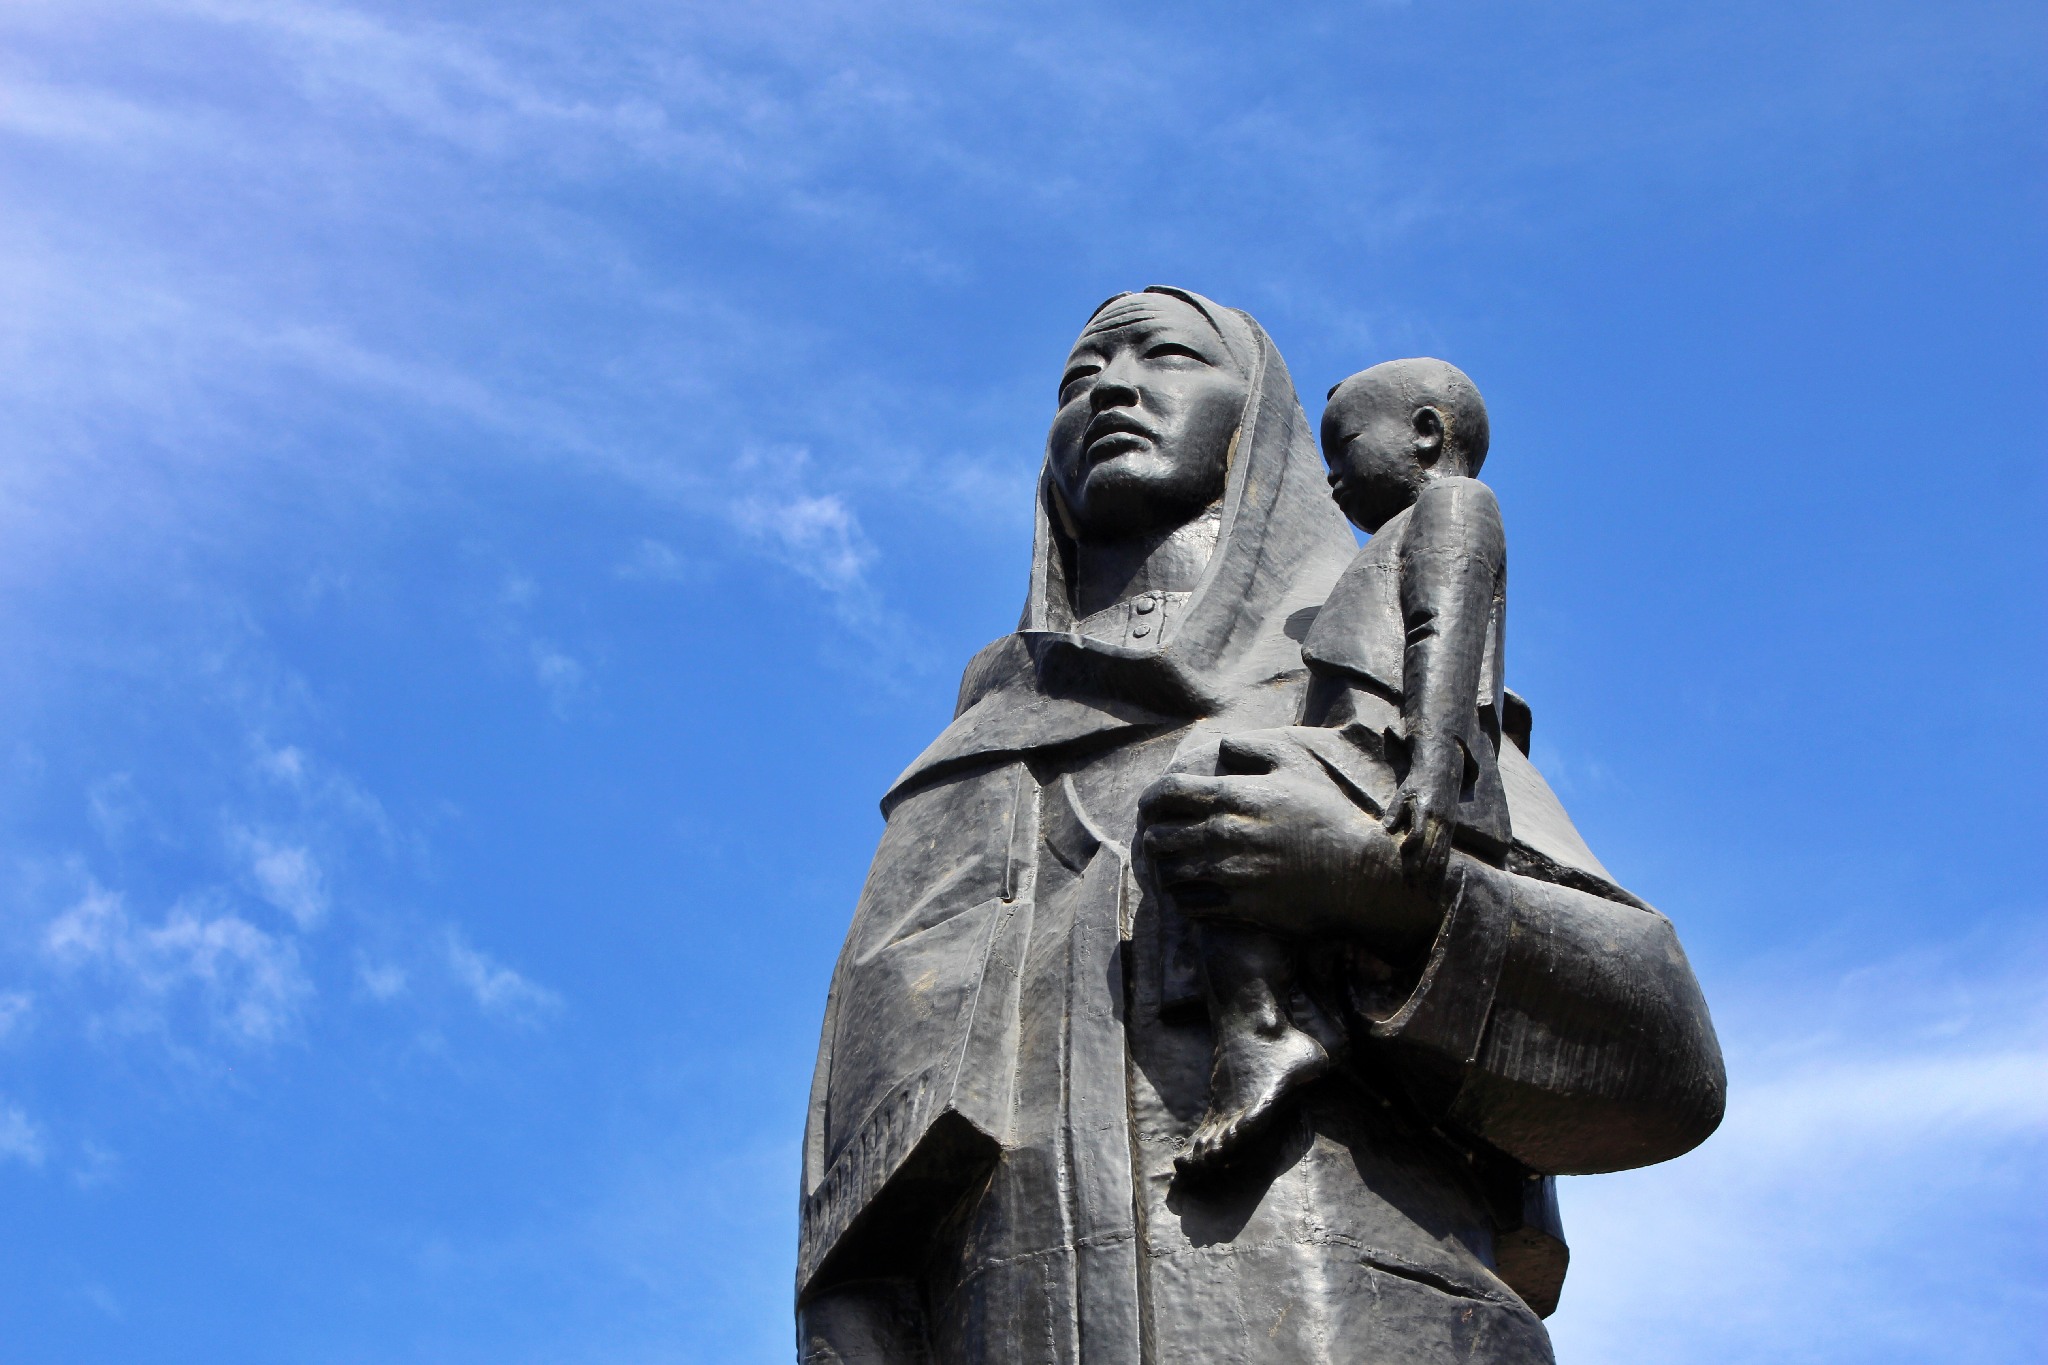 Info Shymkent - "Mother with Child" monument at the Kasiret memorial in Shymkent, Kazakhstan